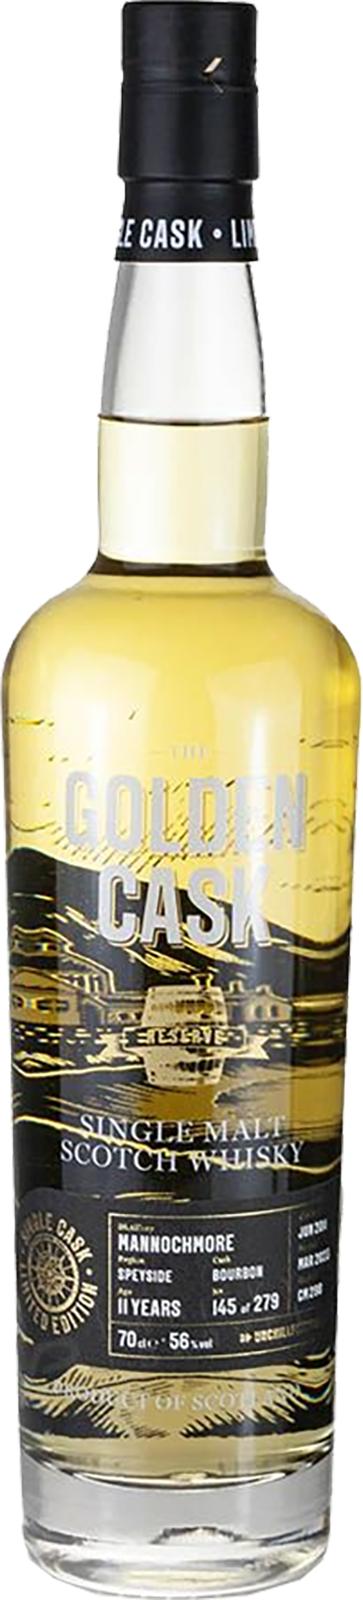 Mannochmore 2011 (The House of MacDuff) The Golden Cask Single Malt Scotch Whisky | 700ML